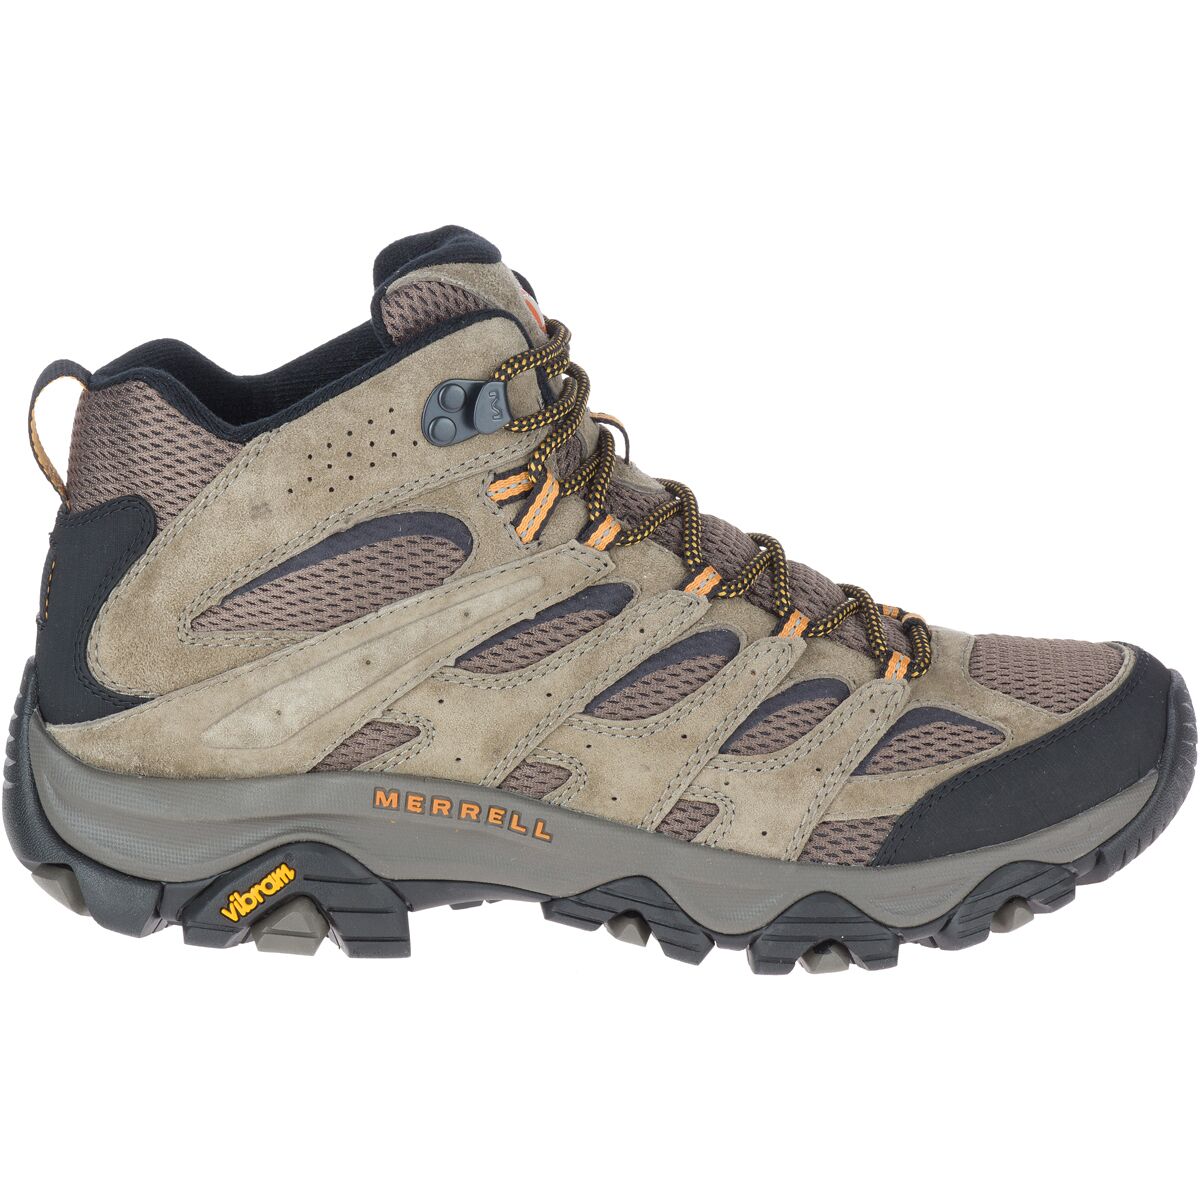 Merrell Moab 3 Mid Hiking Boot - Wide - Men's